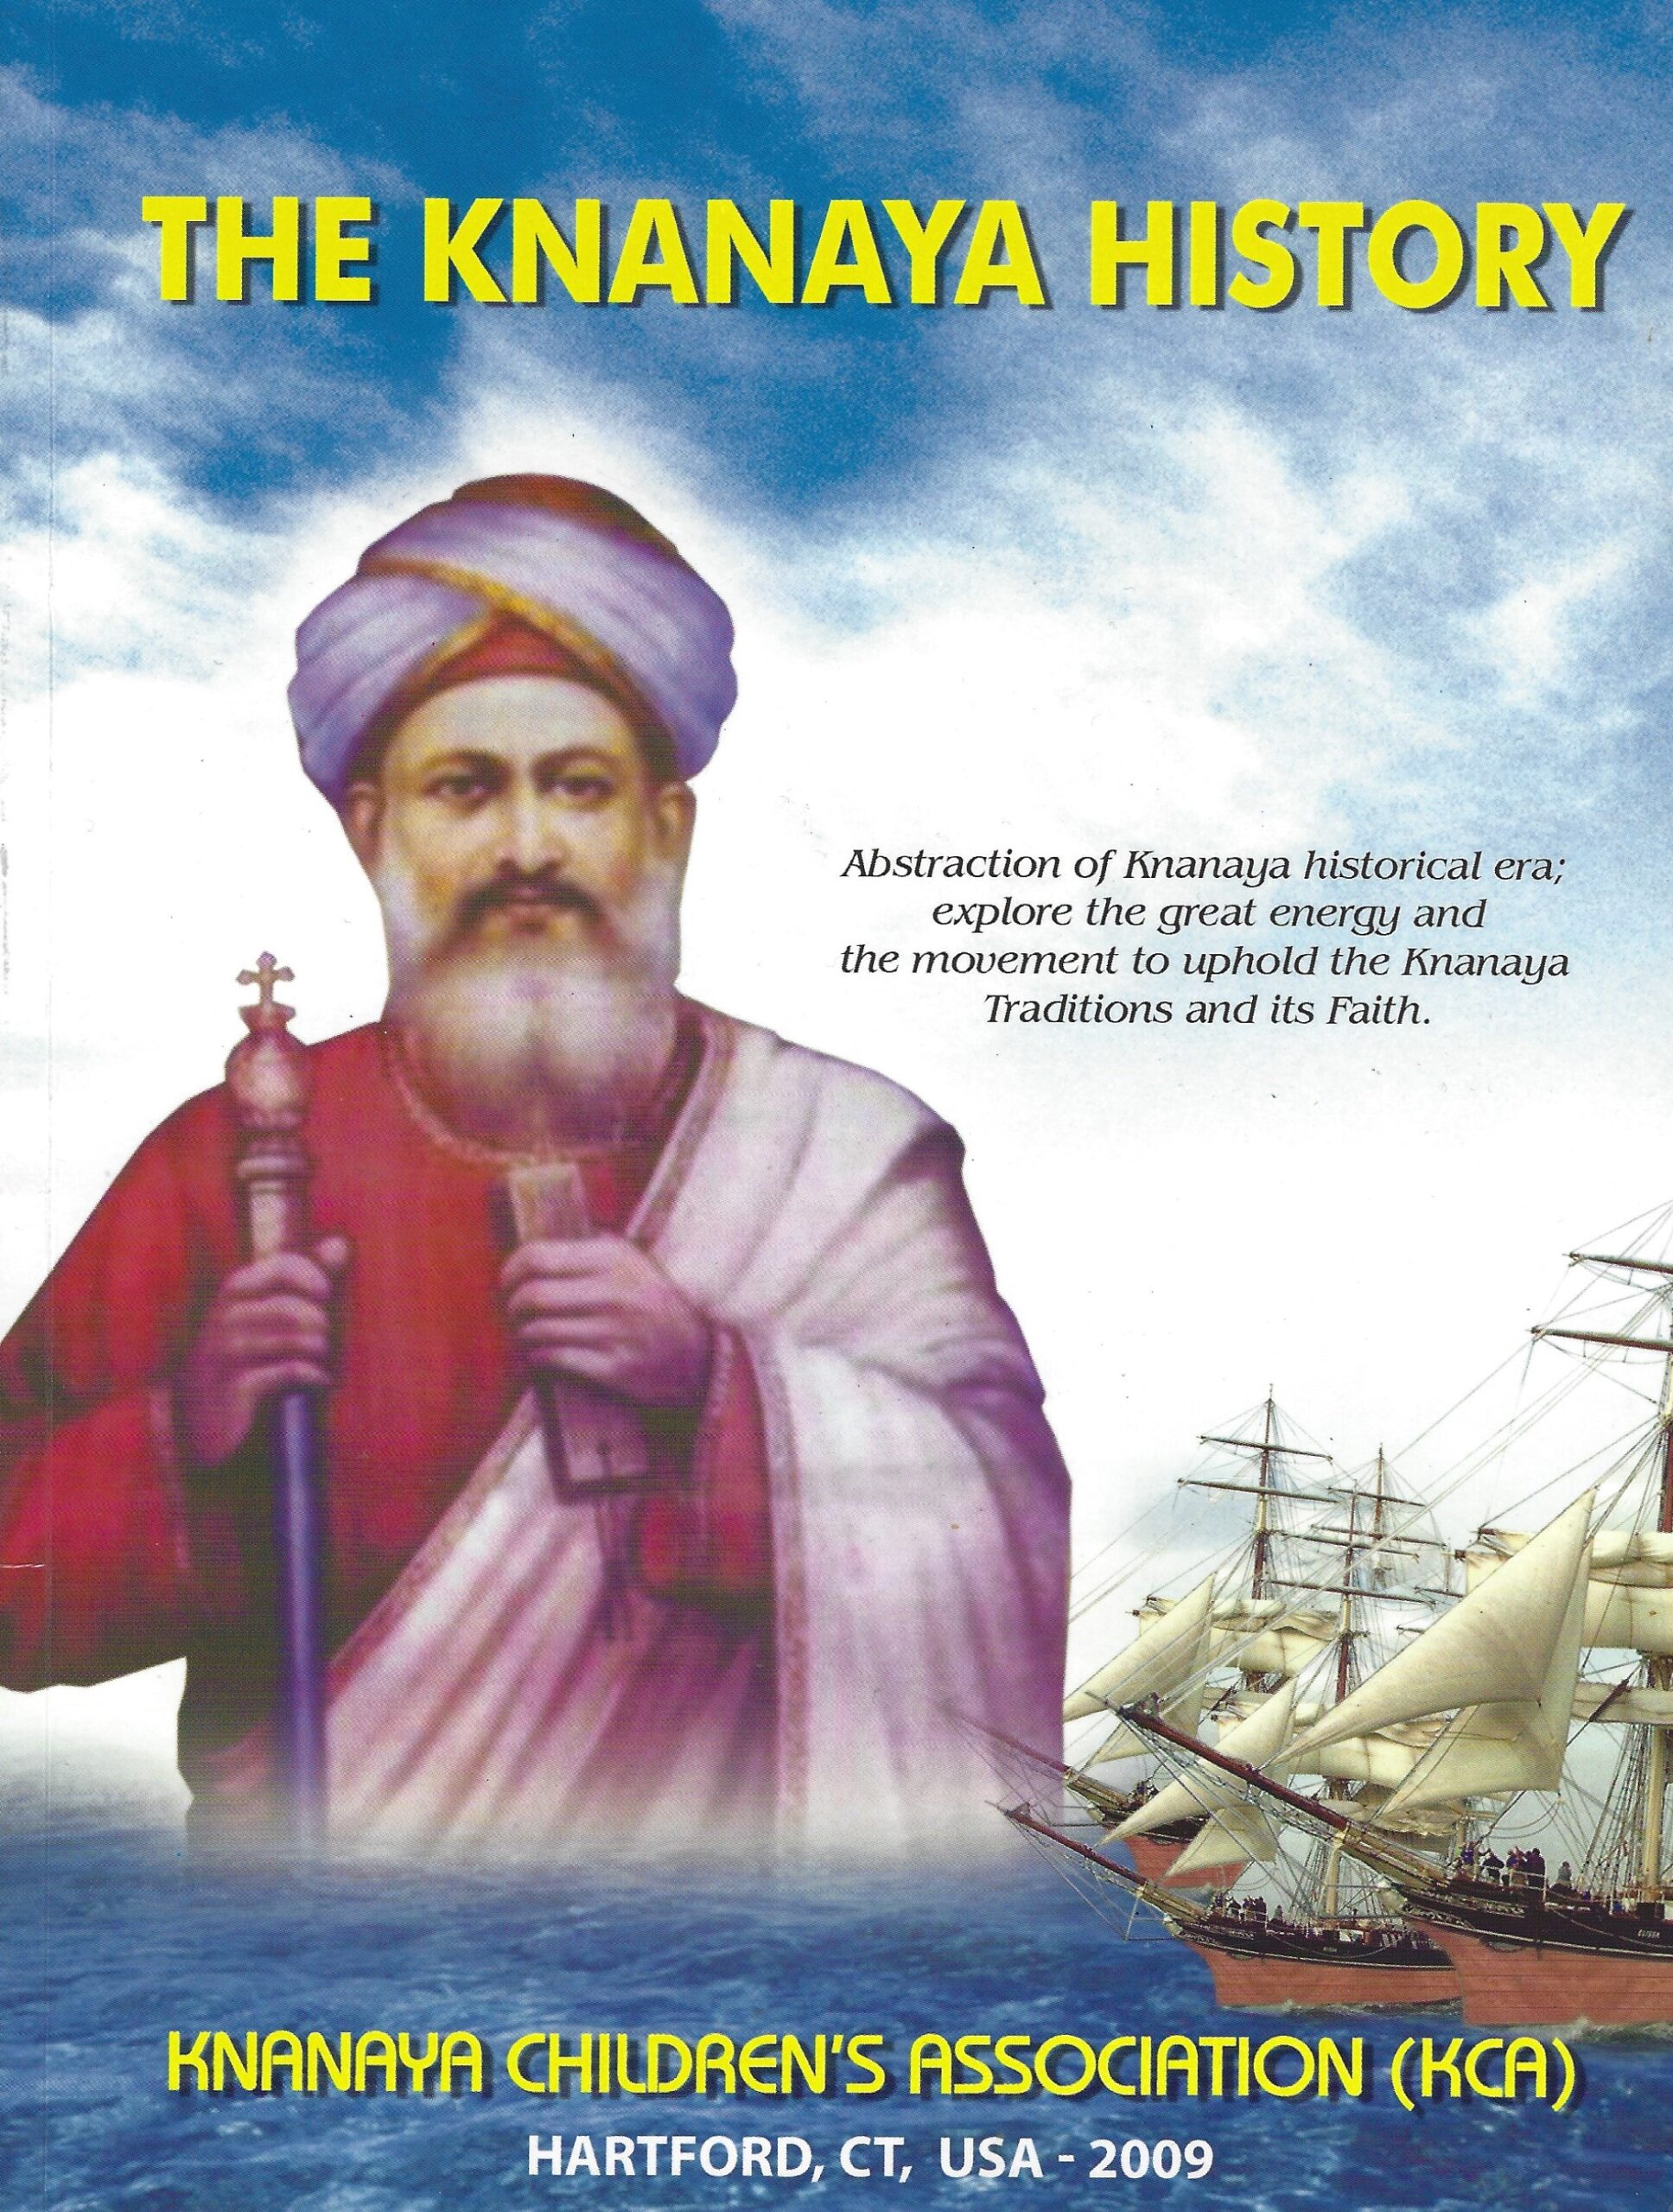 The Knanaya History by Annie Jacob (Mano)